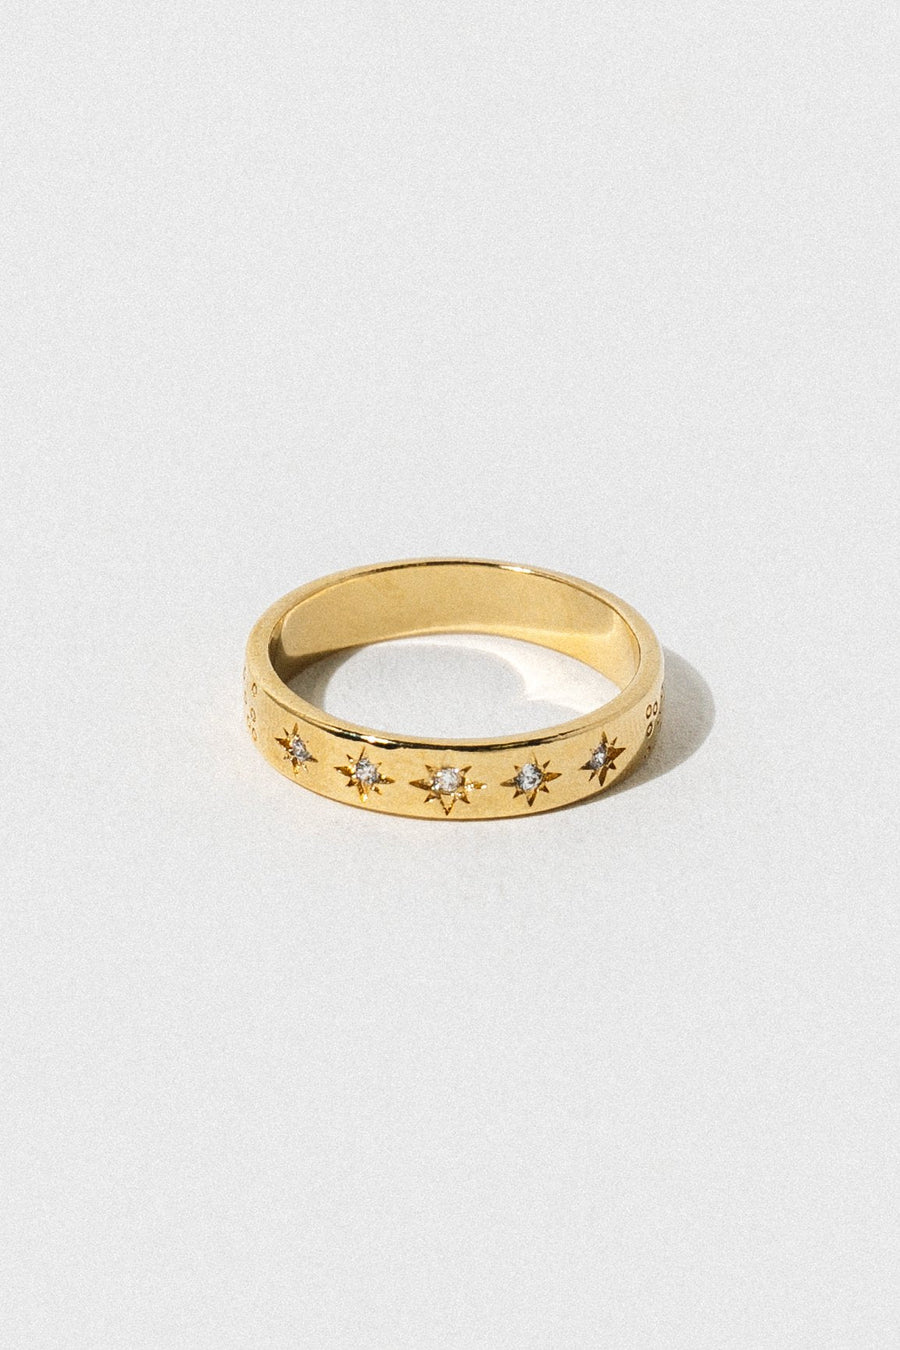 Sparrow Jewelry Stellium Ring